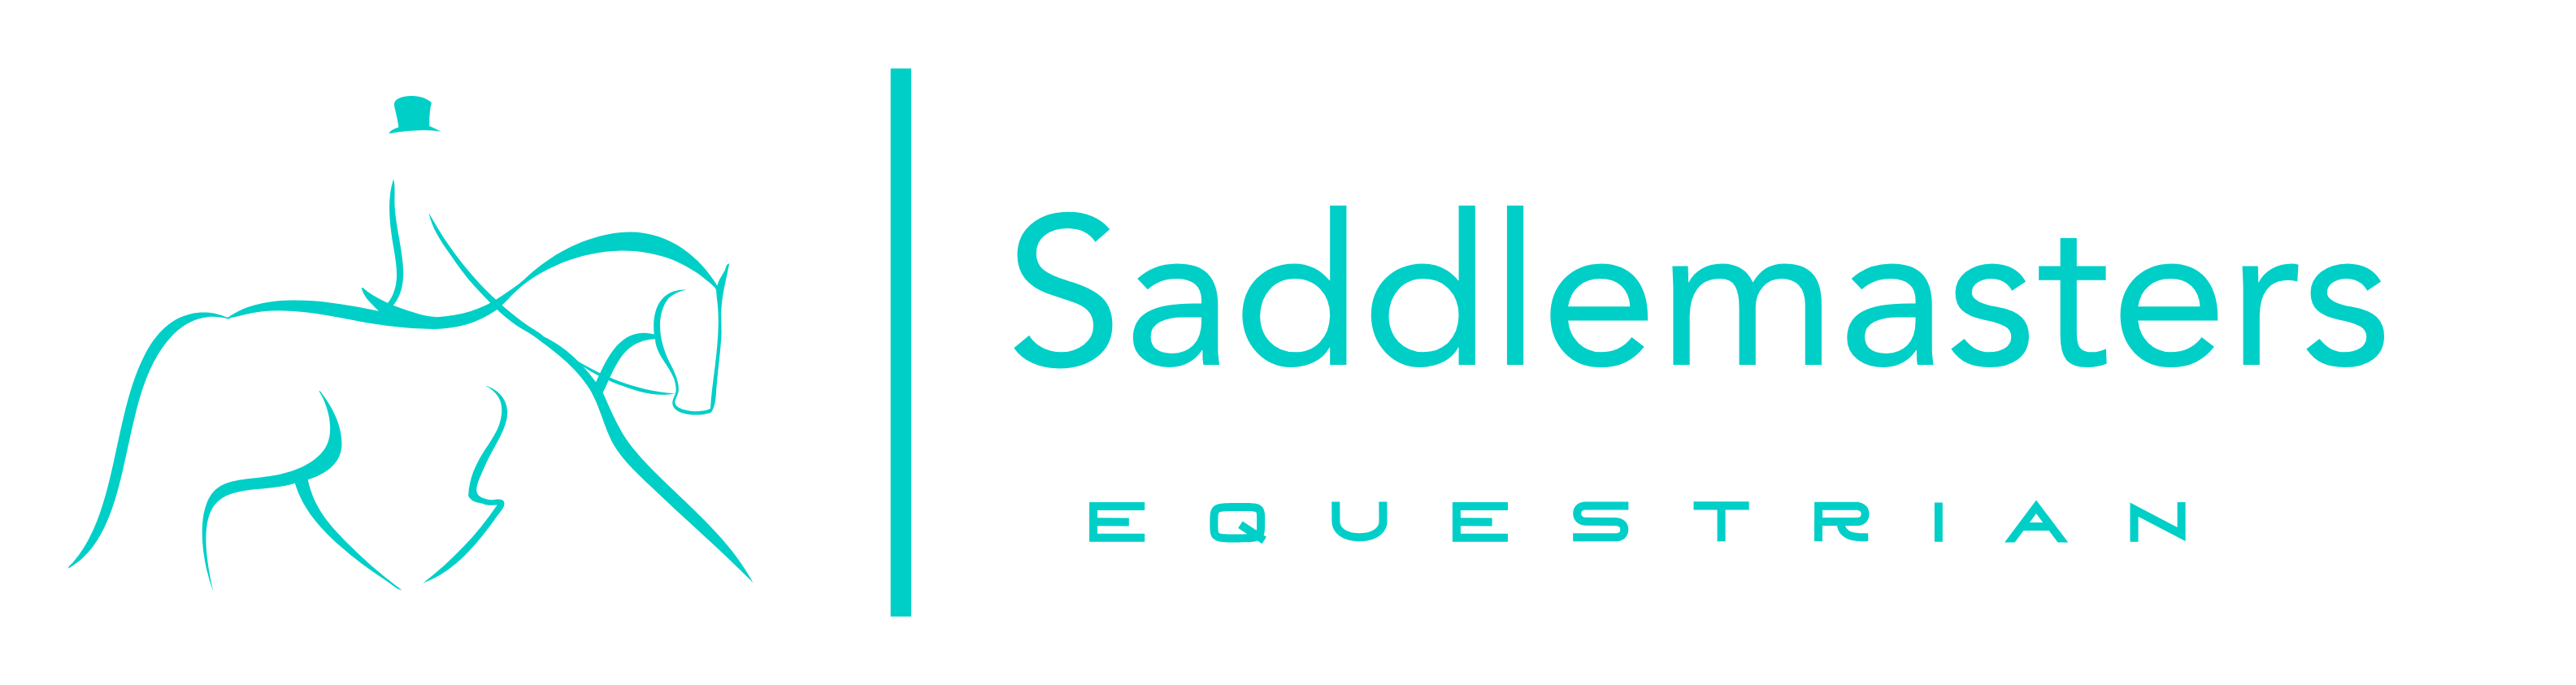  Saddlemasters Equestrian Ltd